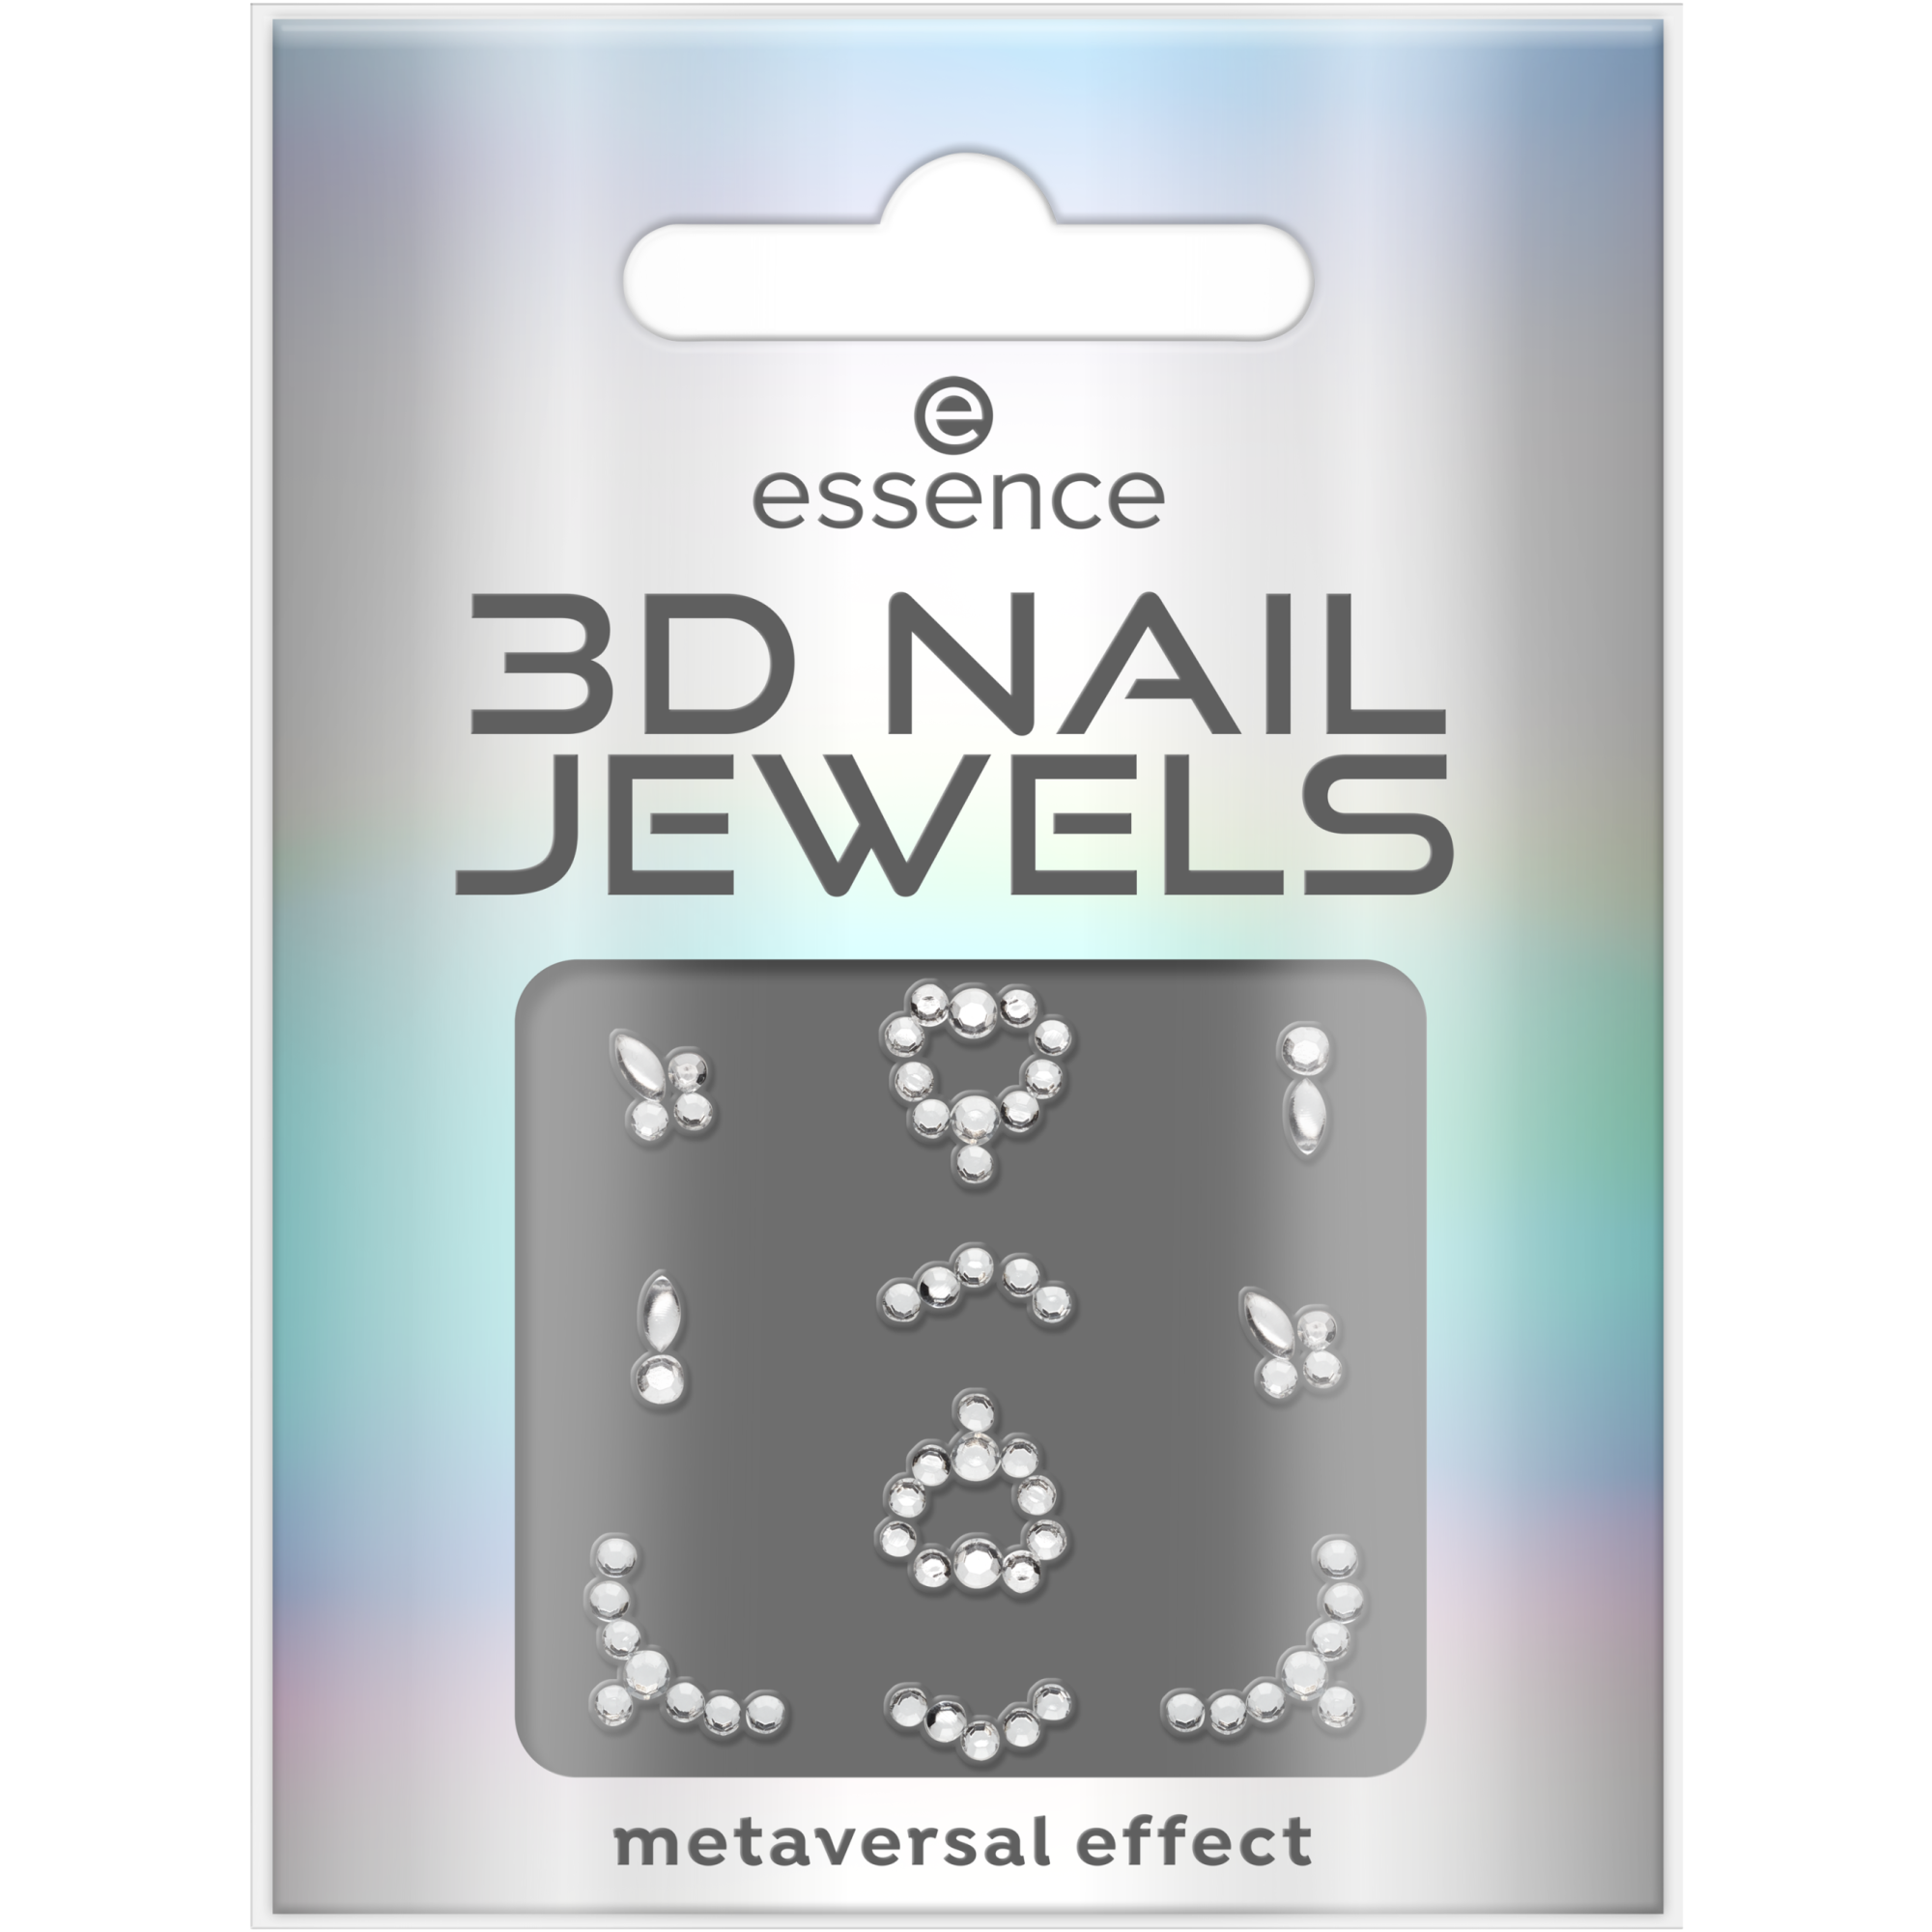 Buy essence 3D NAIL JEWELS mirror universe online